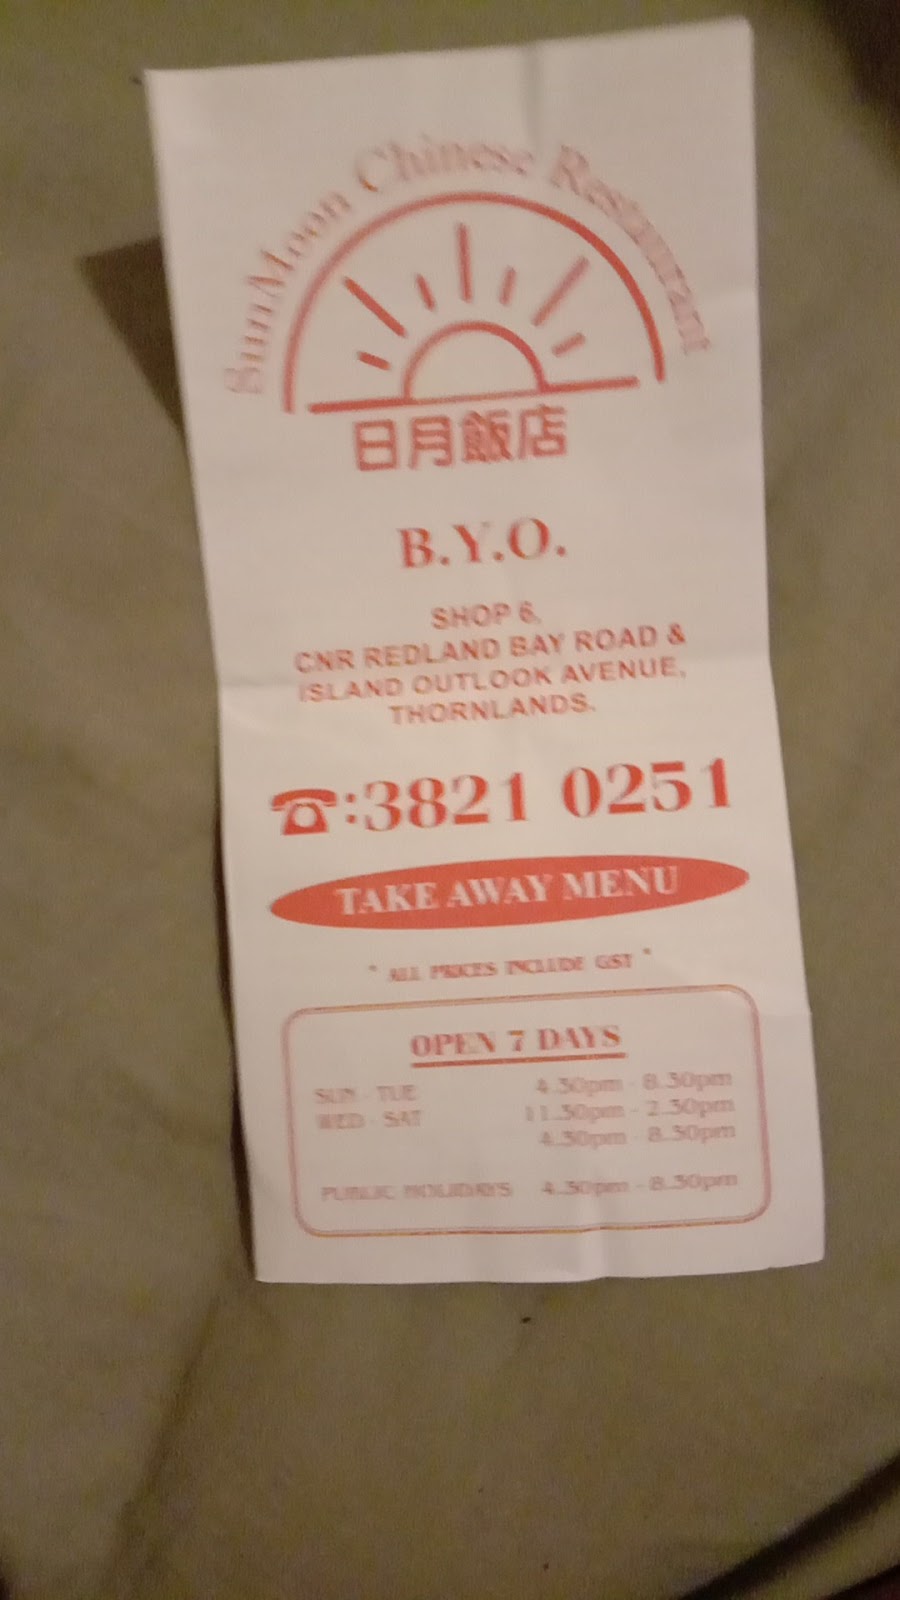 Sunmoon Chinese Restaurant | restaurant | Shop 6, 51 Cleveland Redland Bay Road &, Island Outlook Ave, Thornlands QLD 4164, Australia | 0738210251 OR +61 7 3821 0251